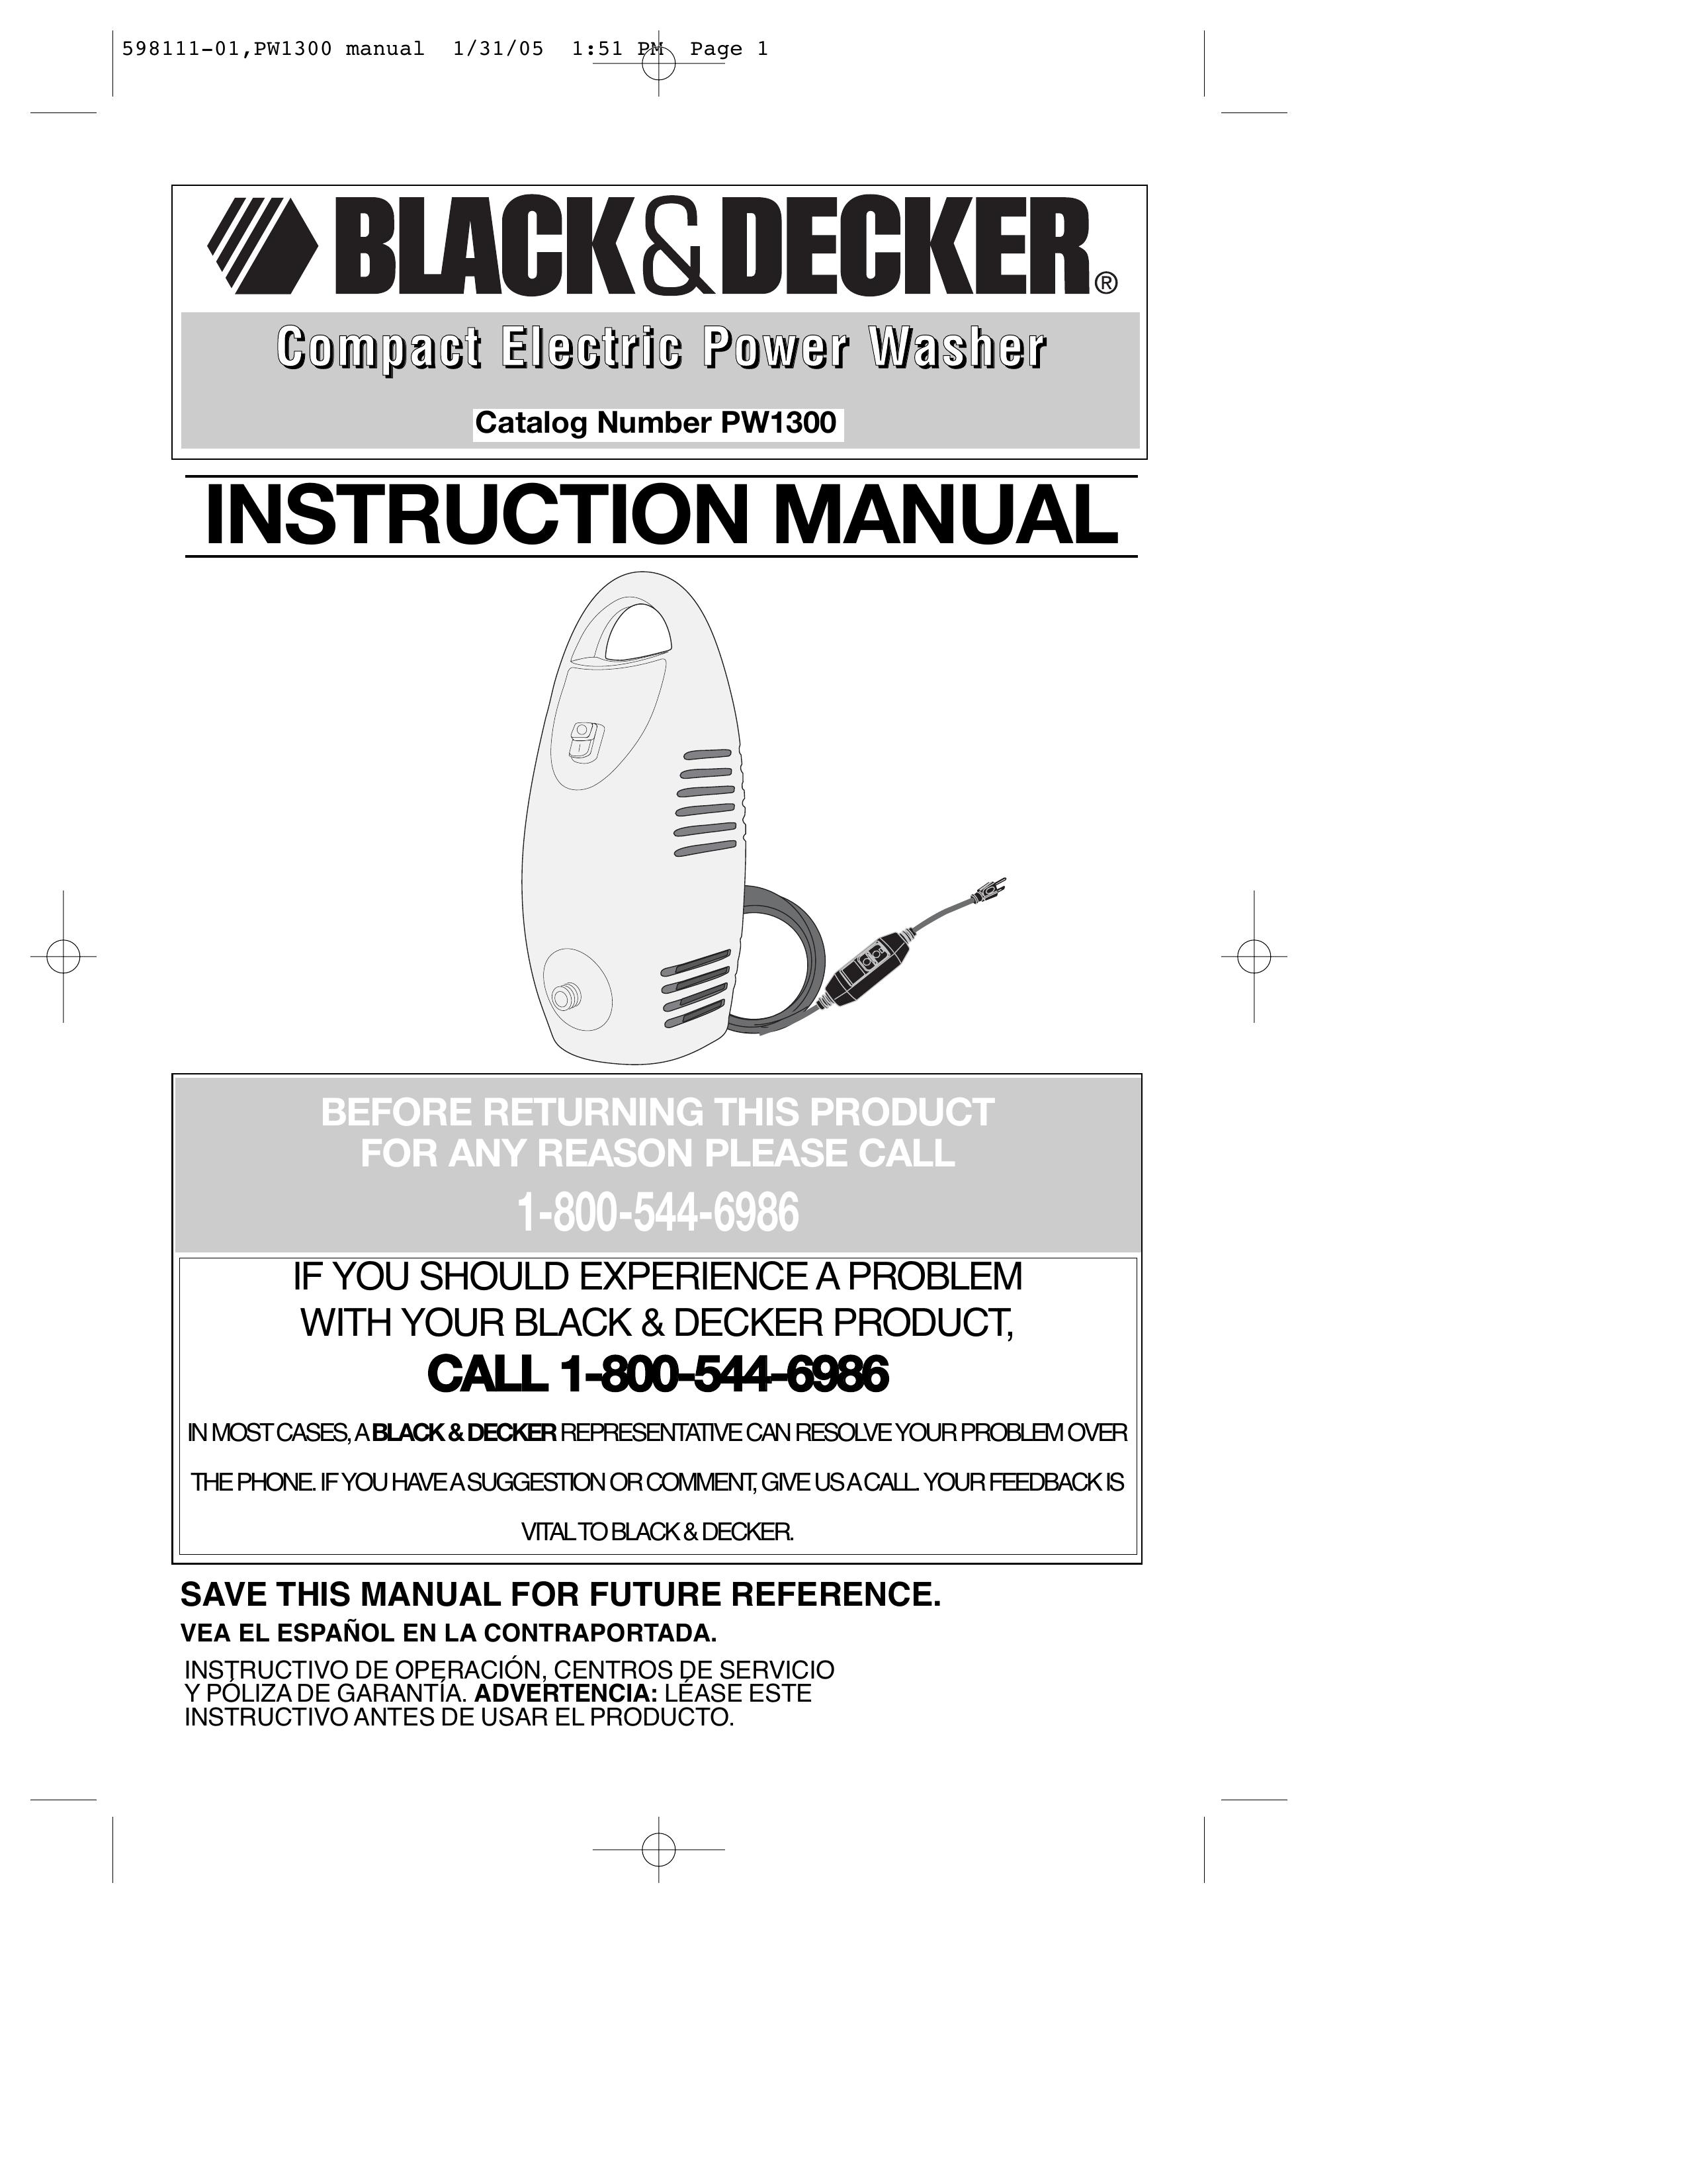 Black & Decker PW1300 Pressure Washer User Manual